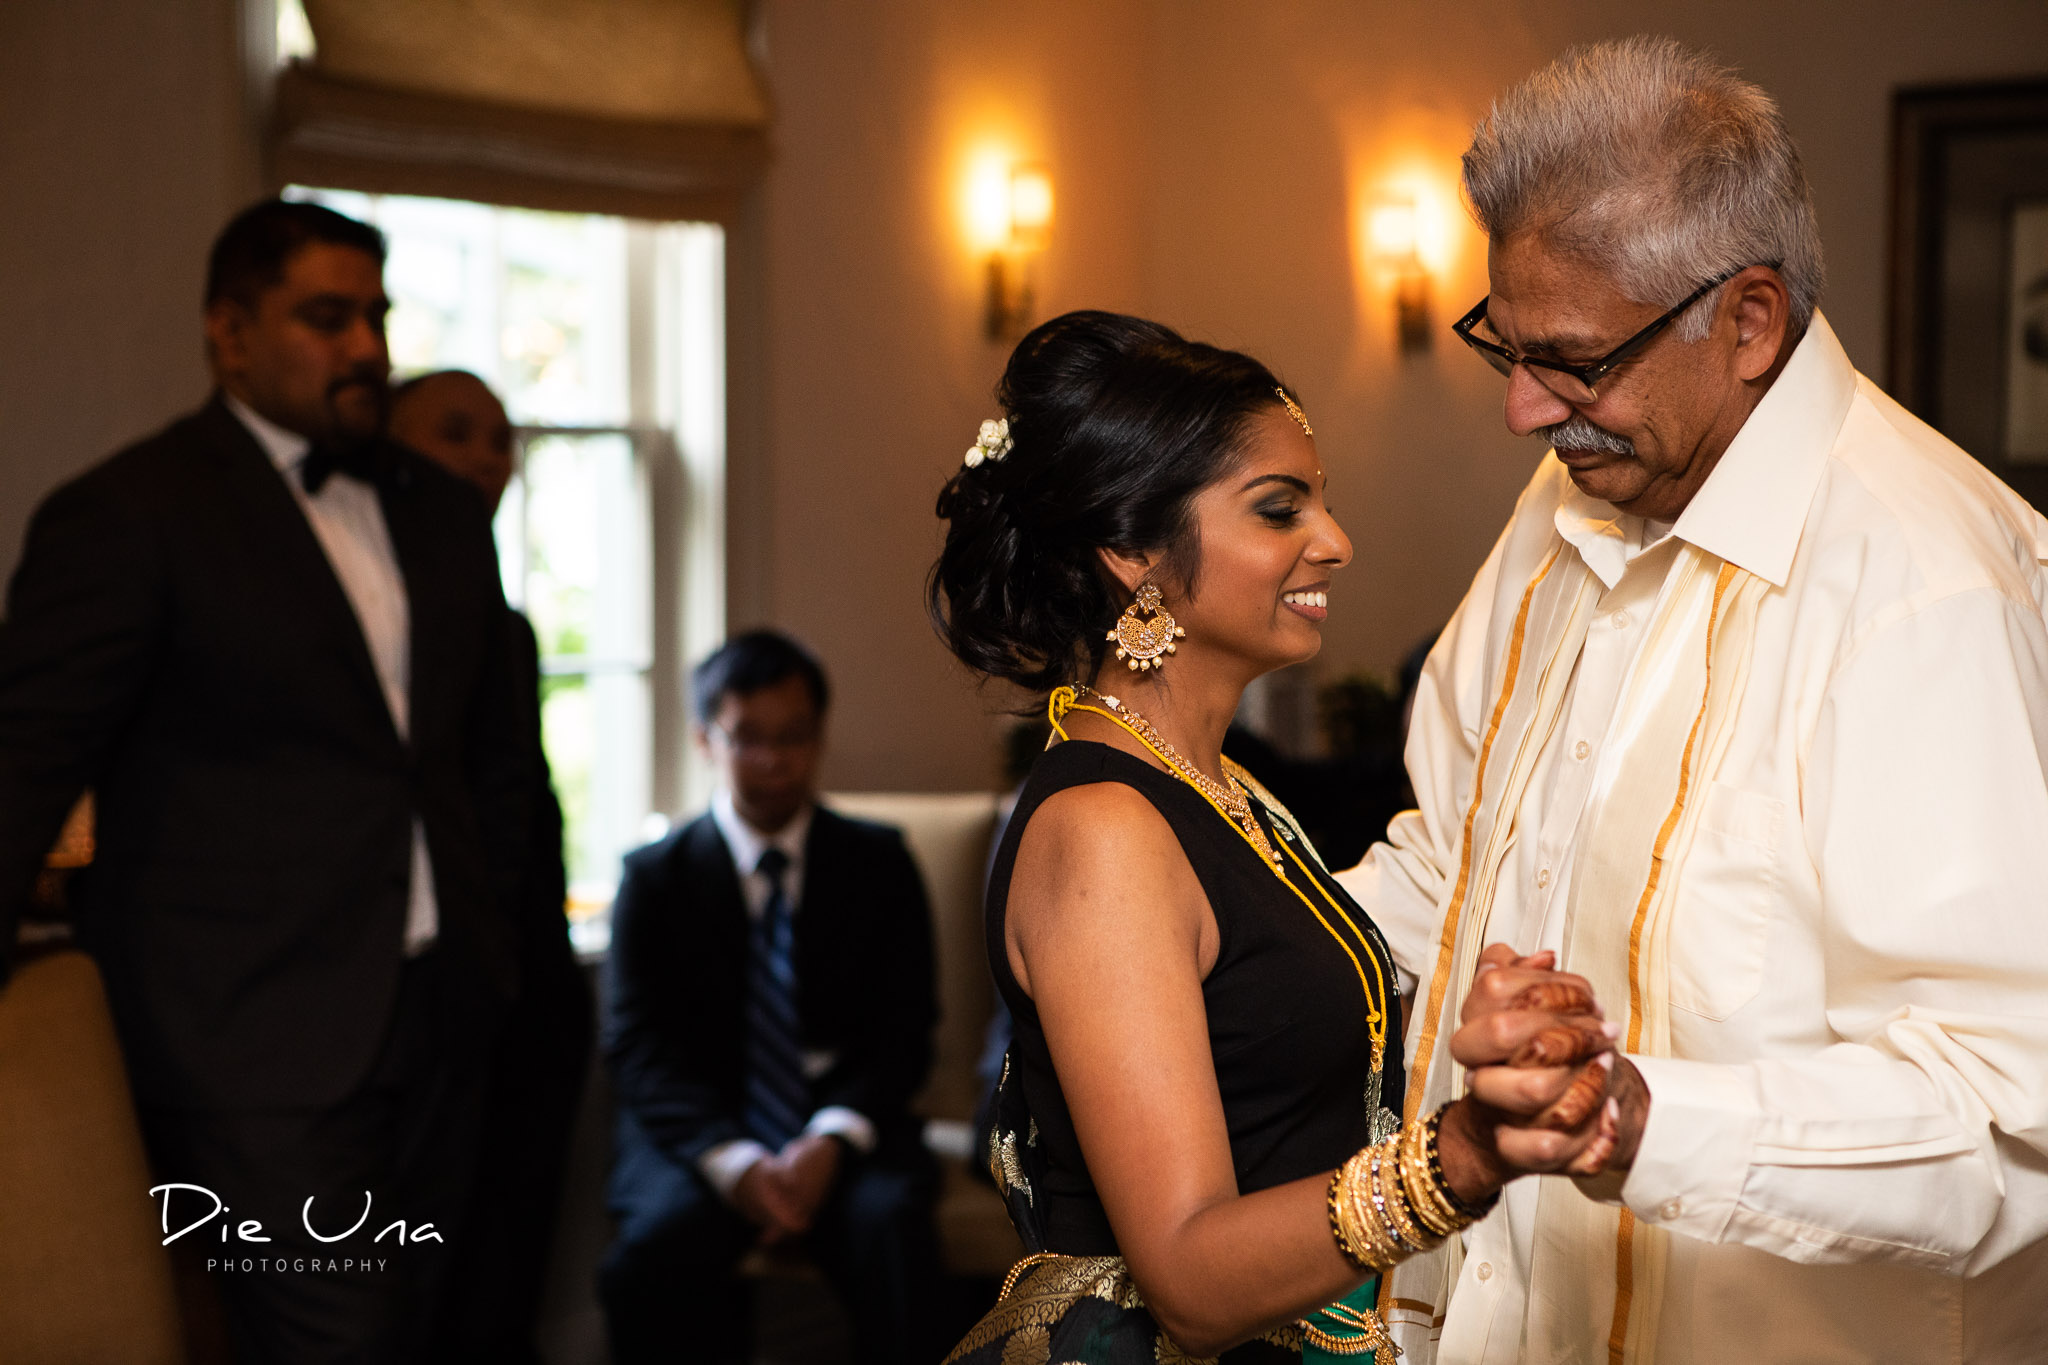 father and daughter dance at Sri Lankan wedding.jpg